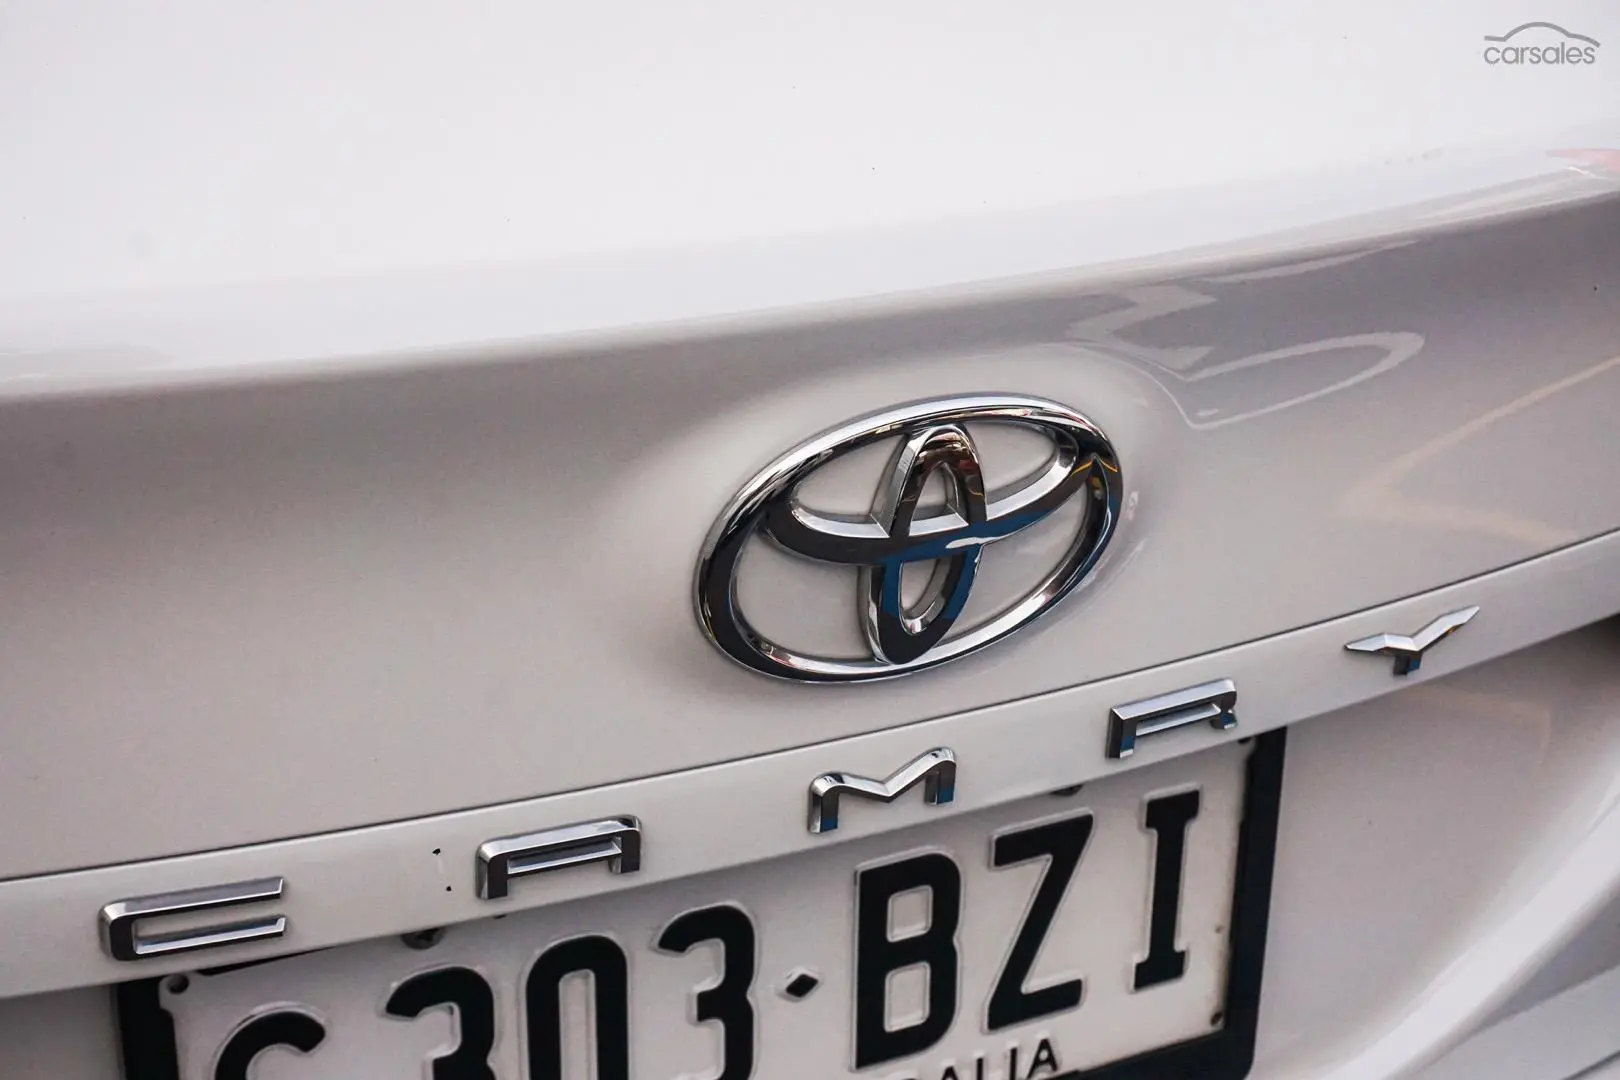 2019 Toyota Camry Image 13